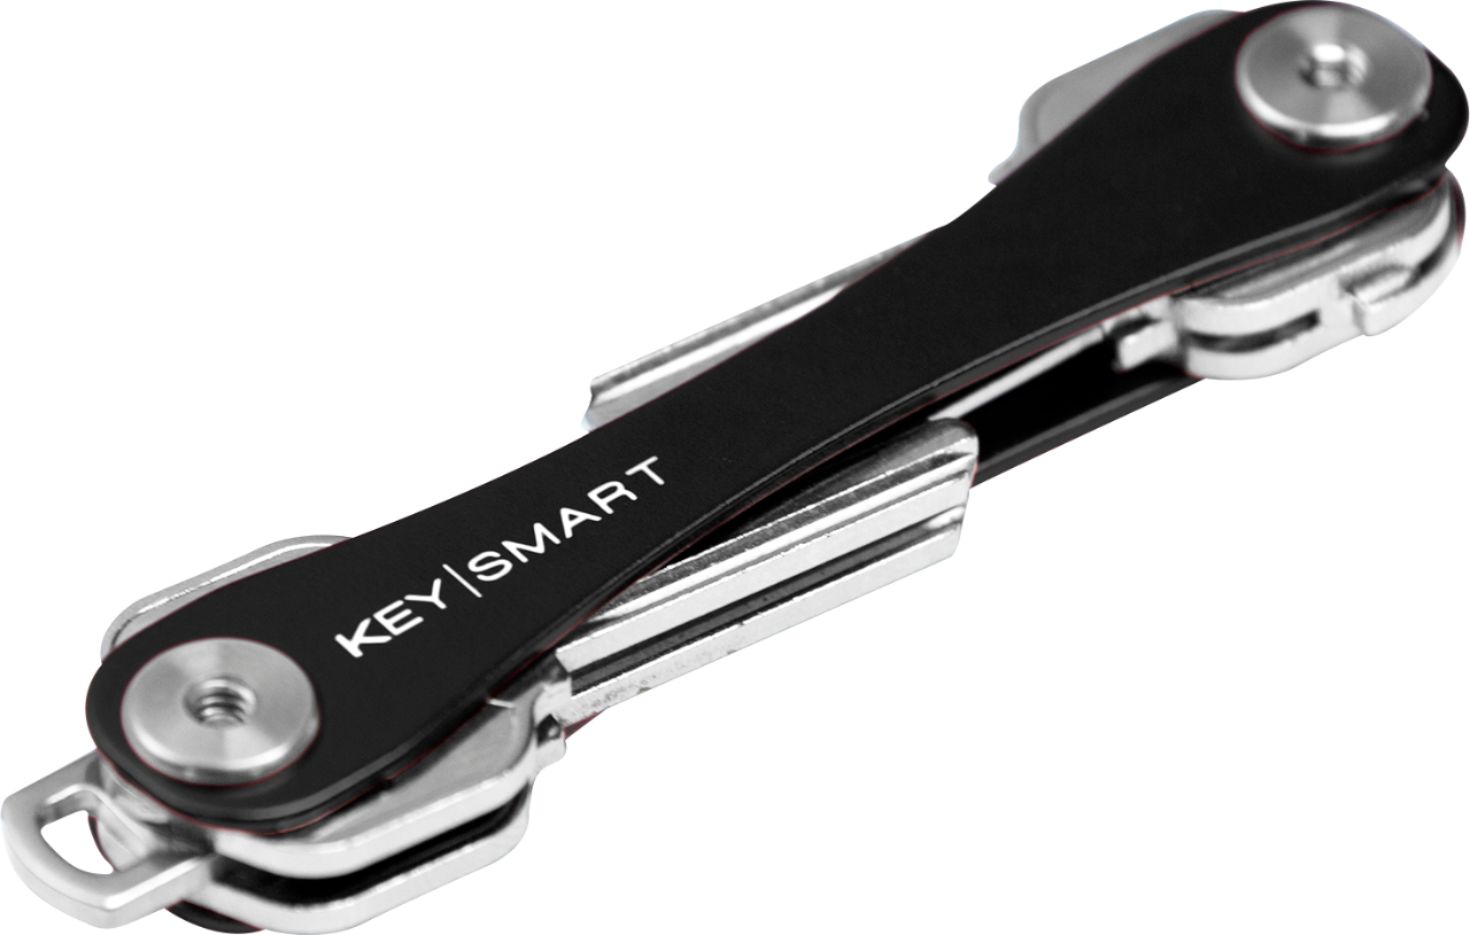 KeySmart Air Compact Key Holder For AirTag Black 56310VRP - Best Buy